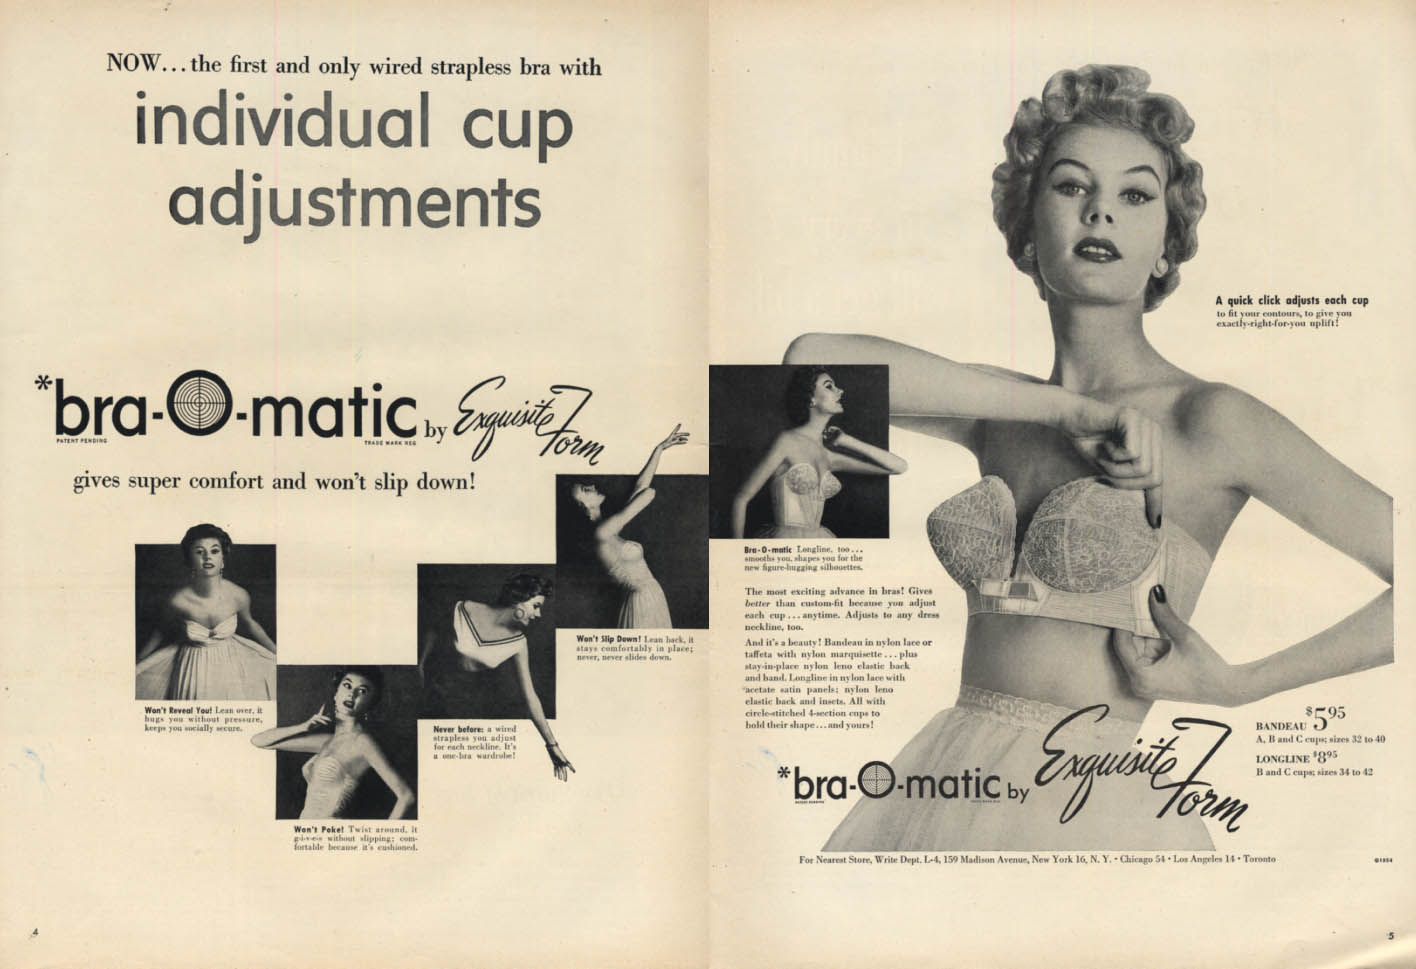 Bra-O-Matic Individual Cup Adjustments - Exquisite Form Bra ad 1954 L